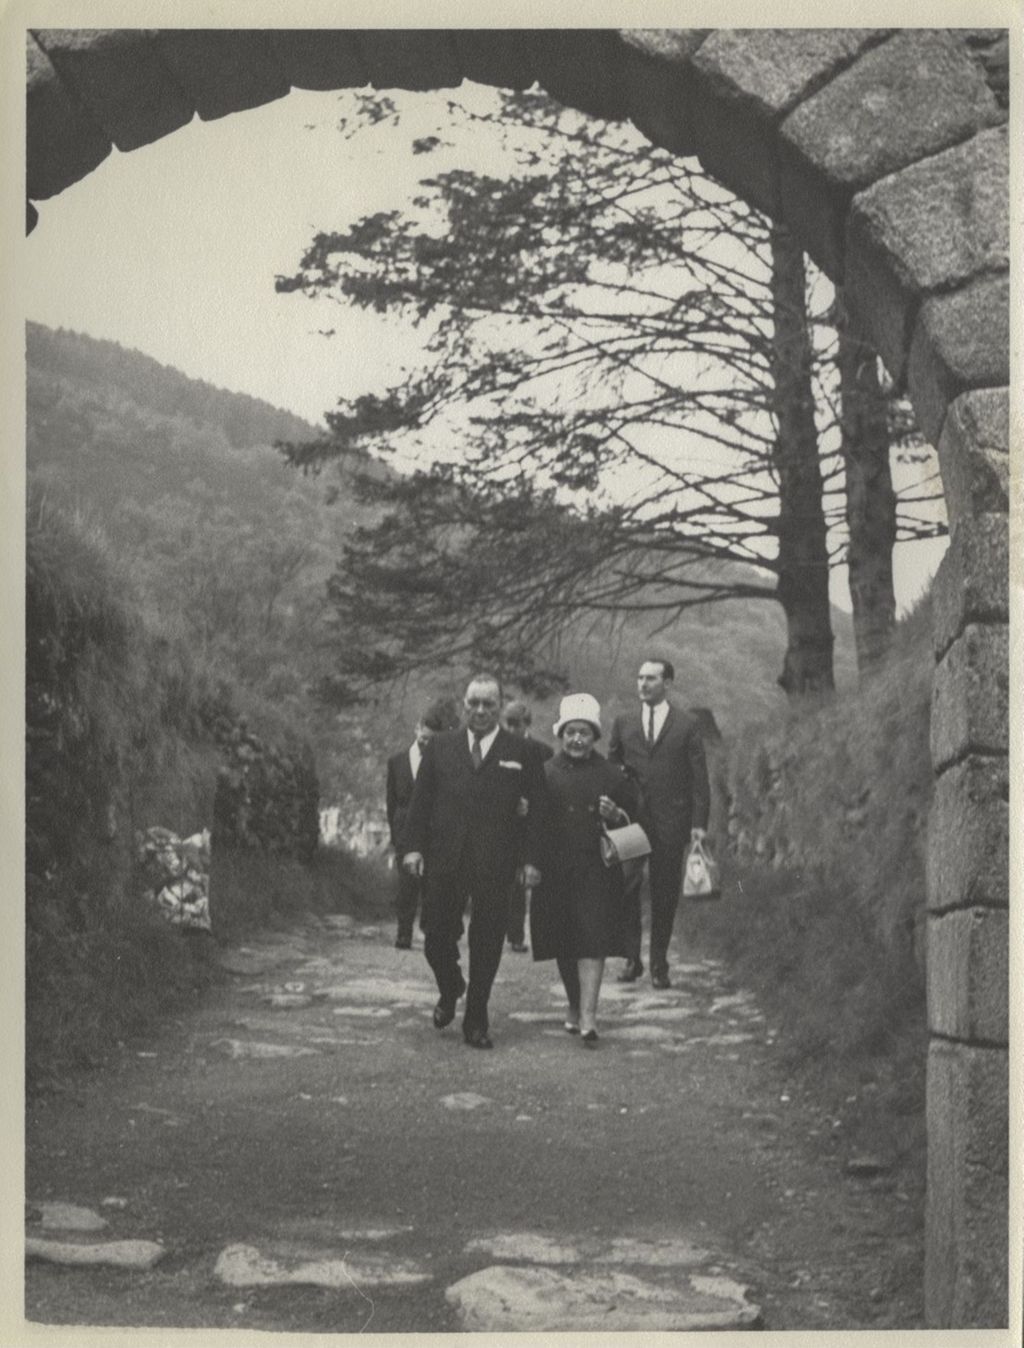 Miniature of Trip to Ireland, Richard J. and Eleanor Daley walking along a lane